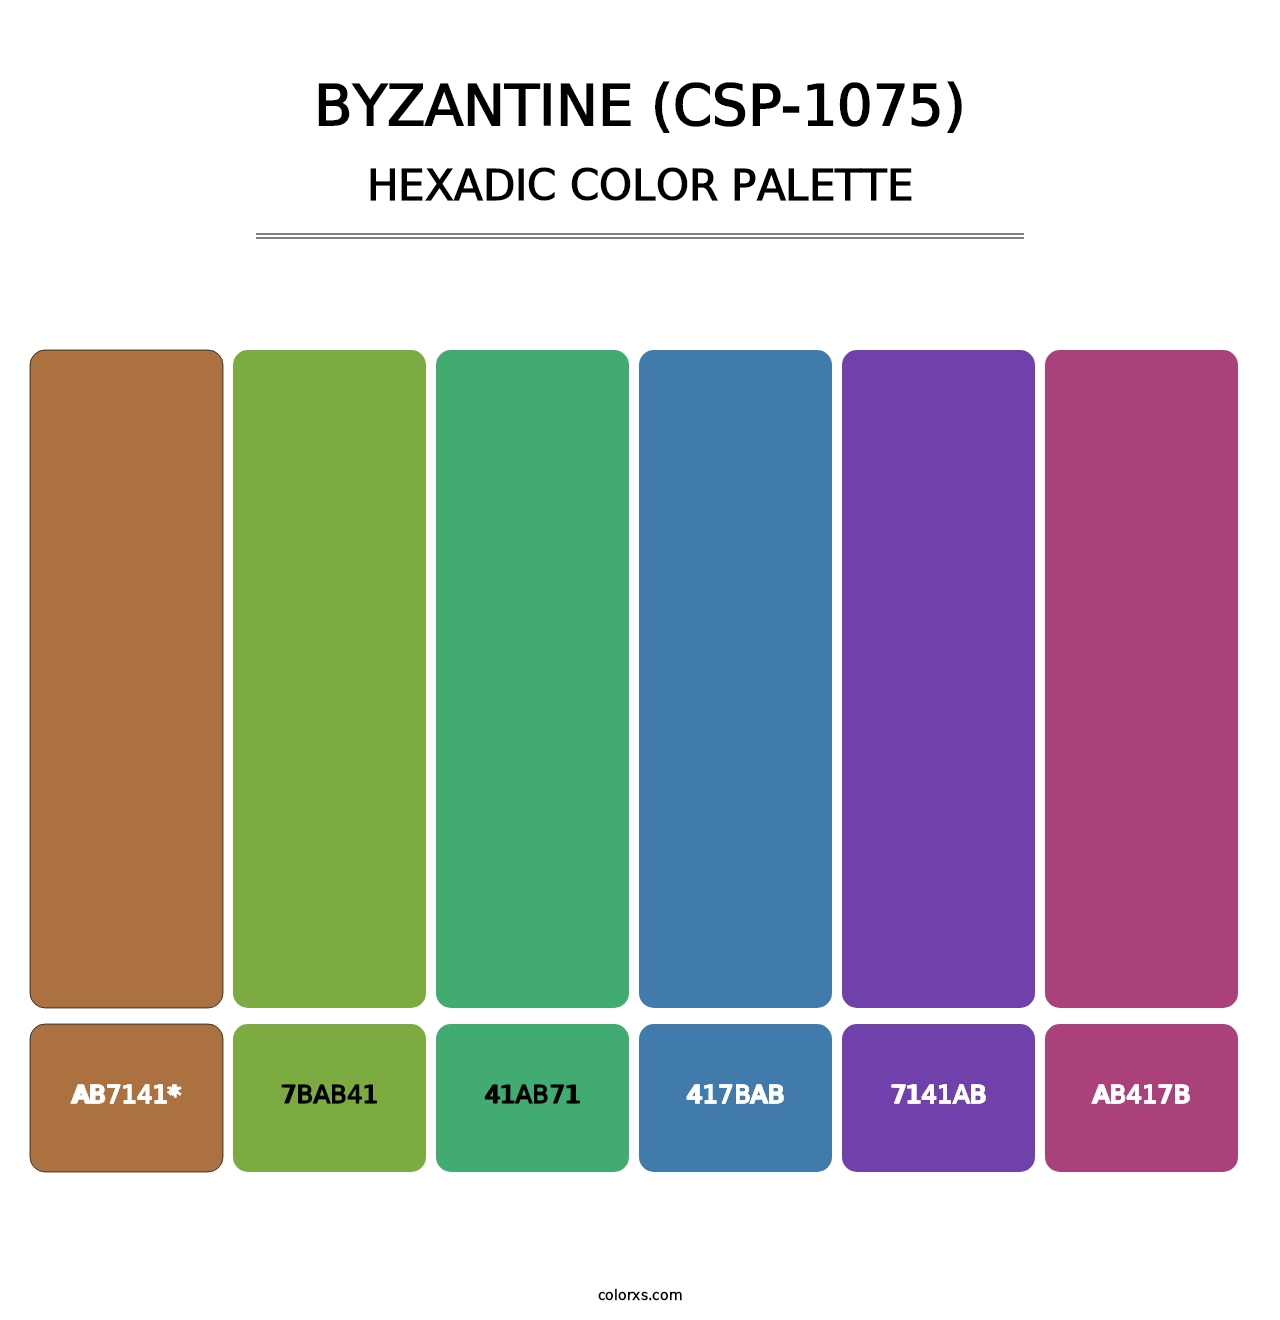 Byzantine (CSP-1075) - Hexadic Color Palette